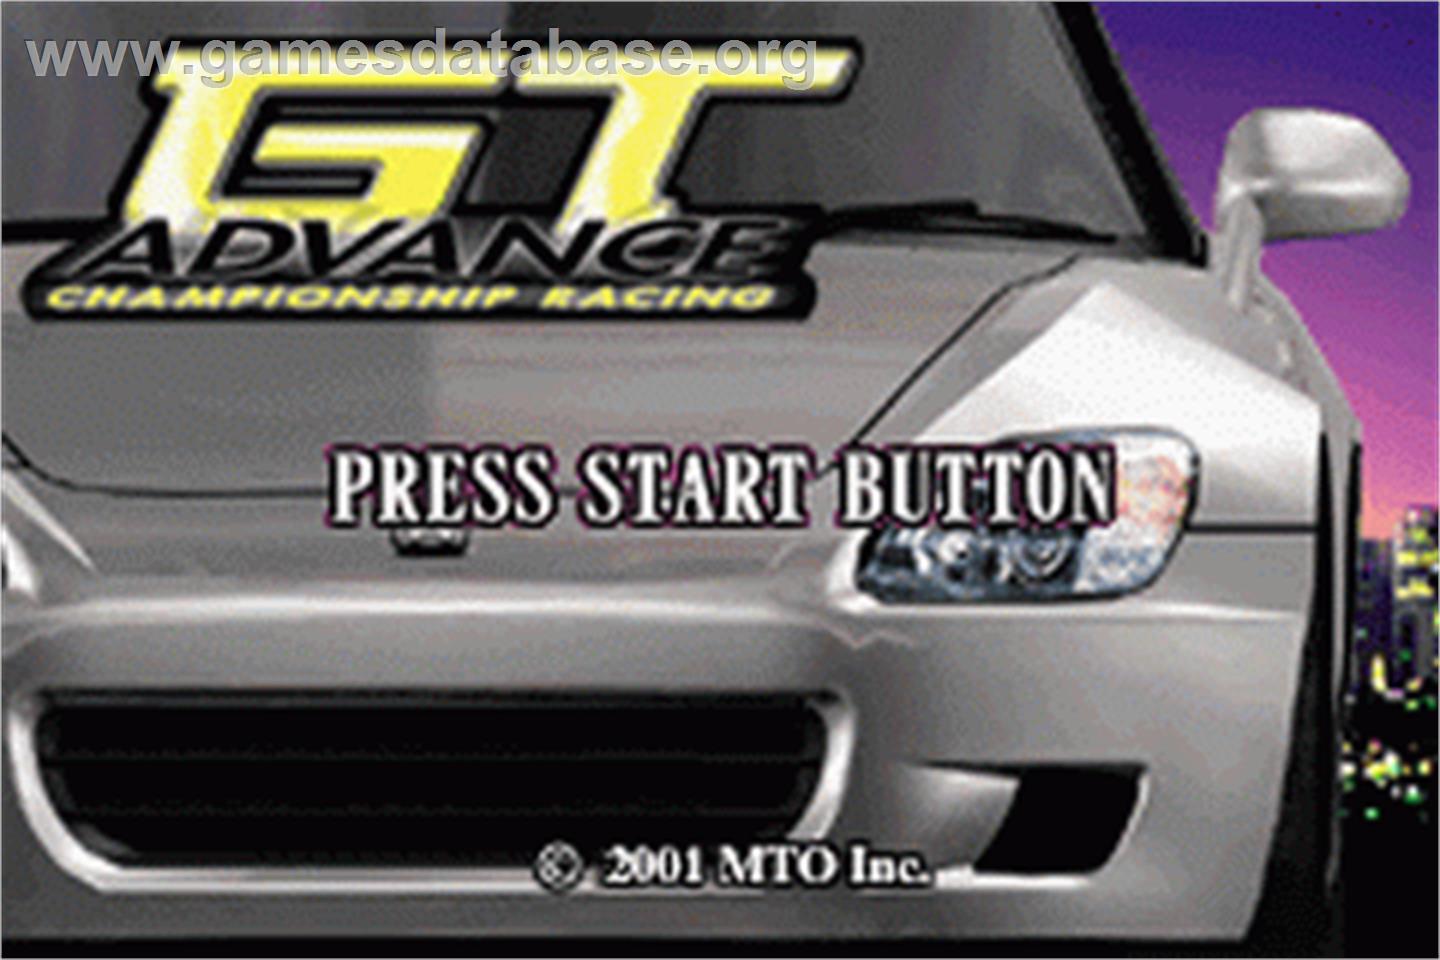 GT Advance Championship Racing - Nintendo Game Boy Advance - Artwork - Title Screen